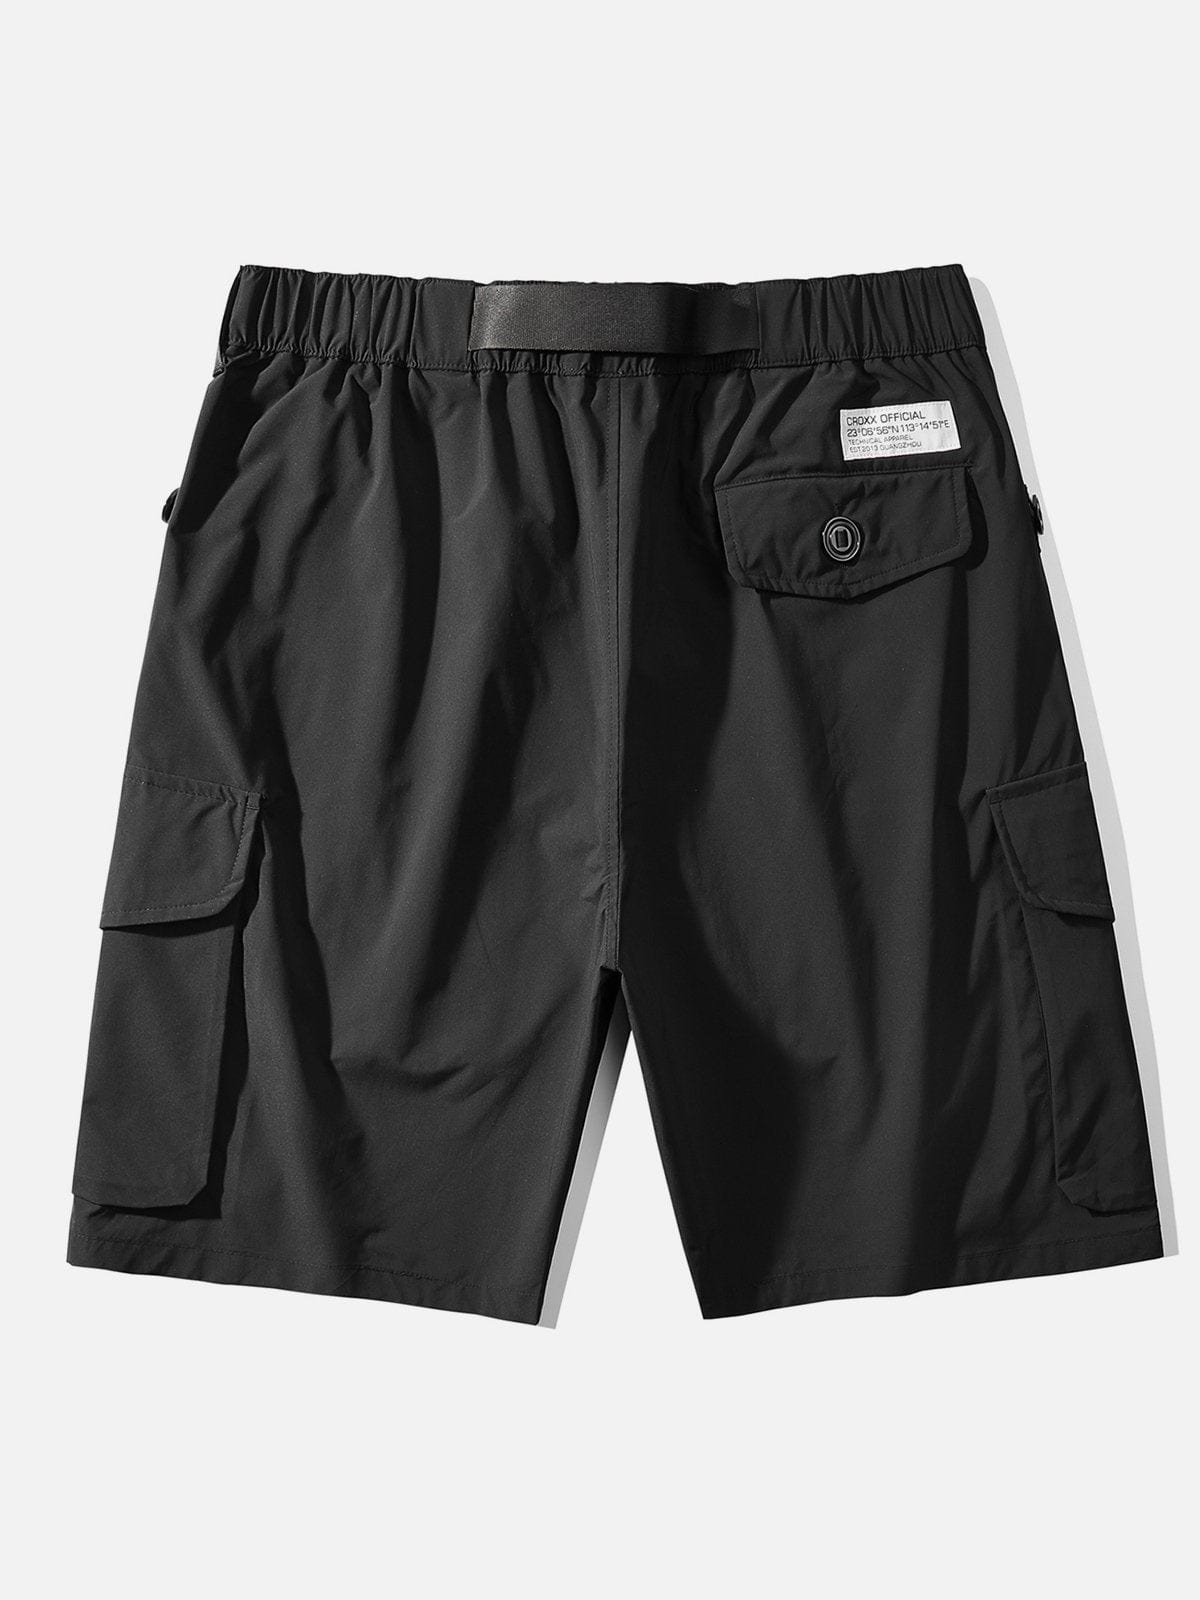 Personalized Belt Multi Pockets Shorts Streetwear Brand Techwear Combat Tactical YUGEN THEORY